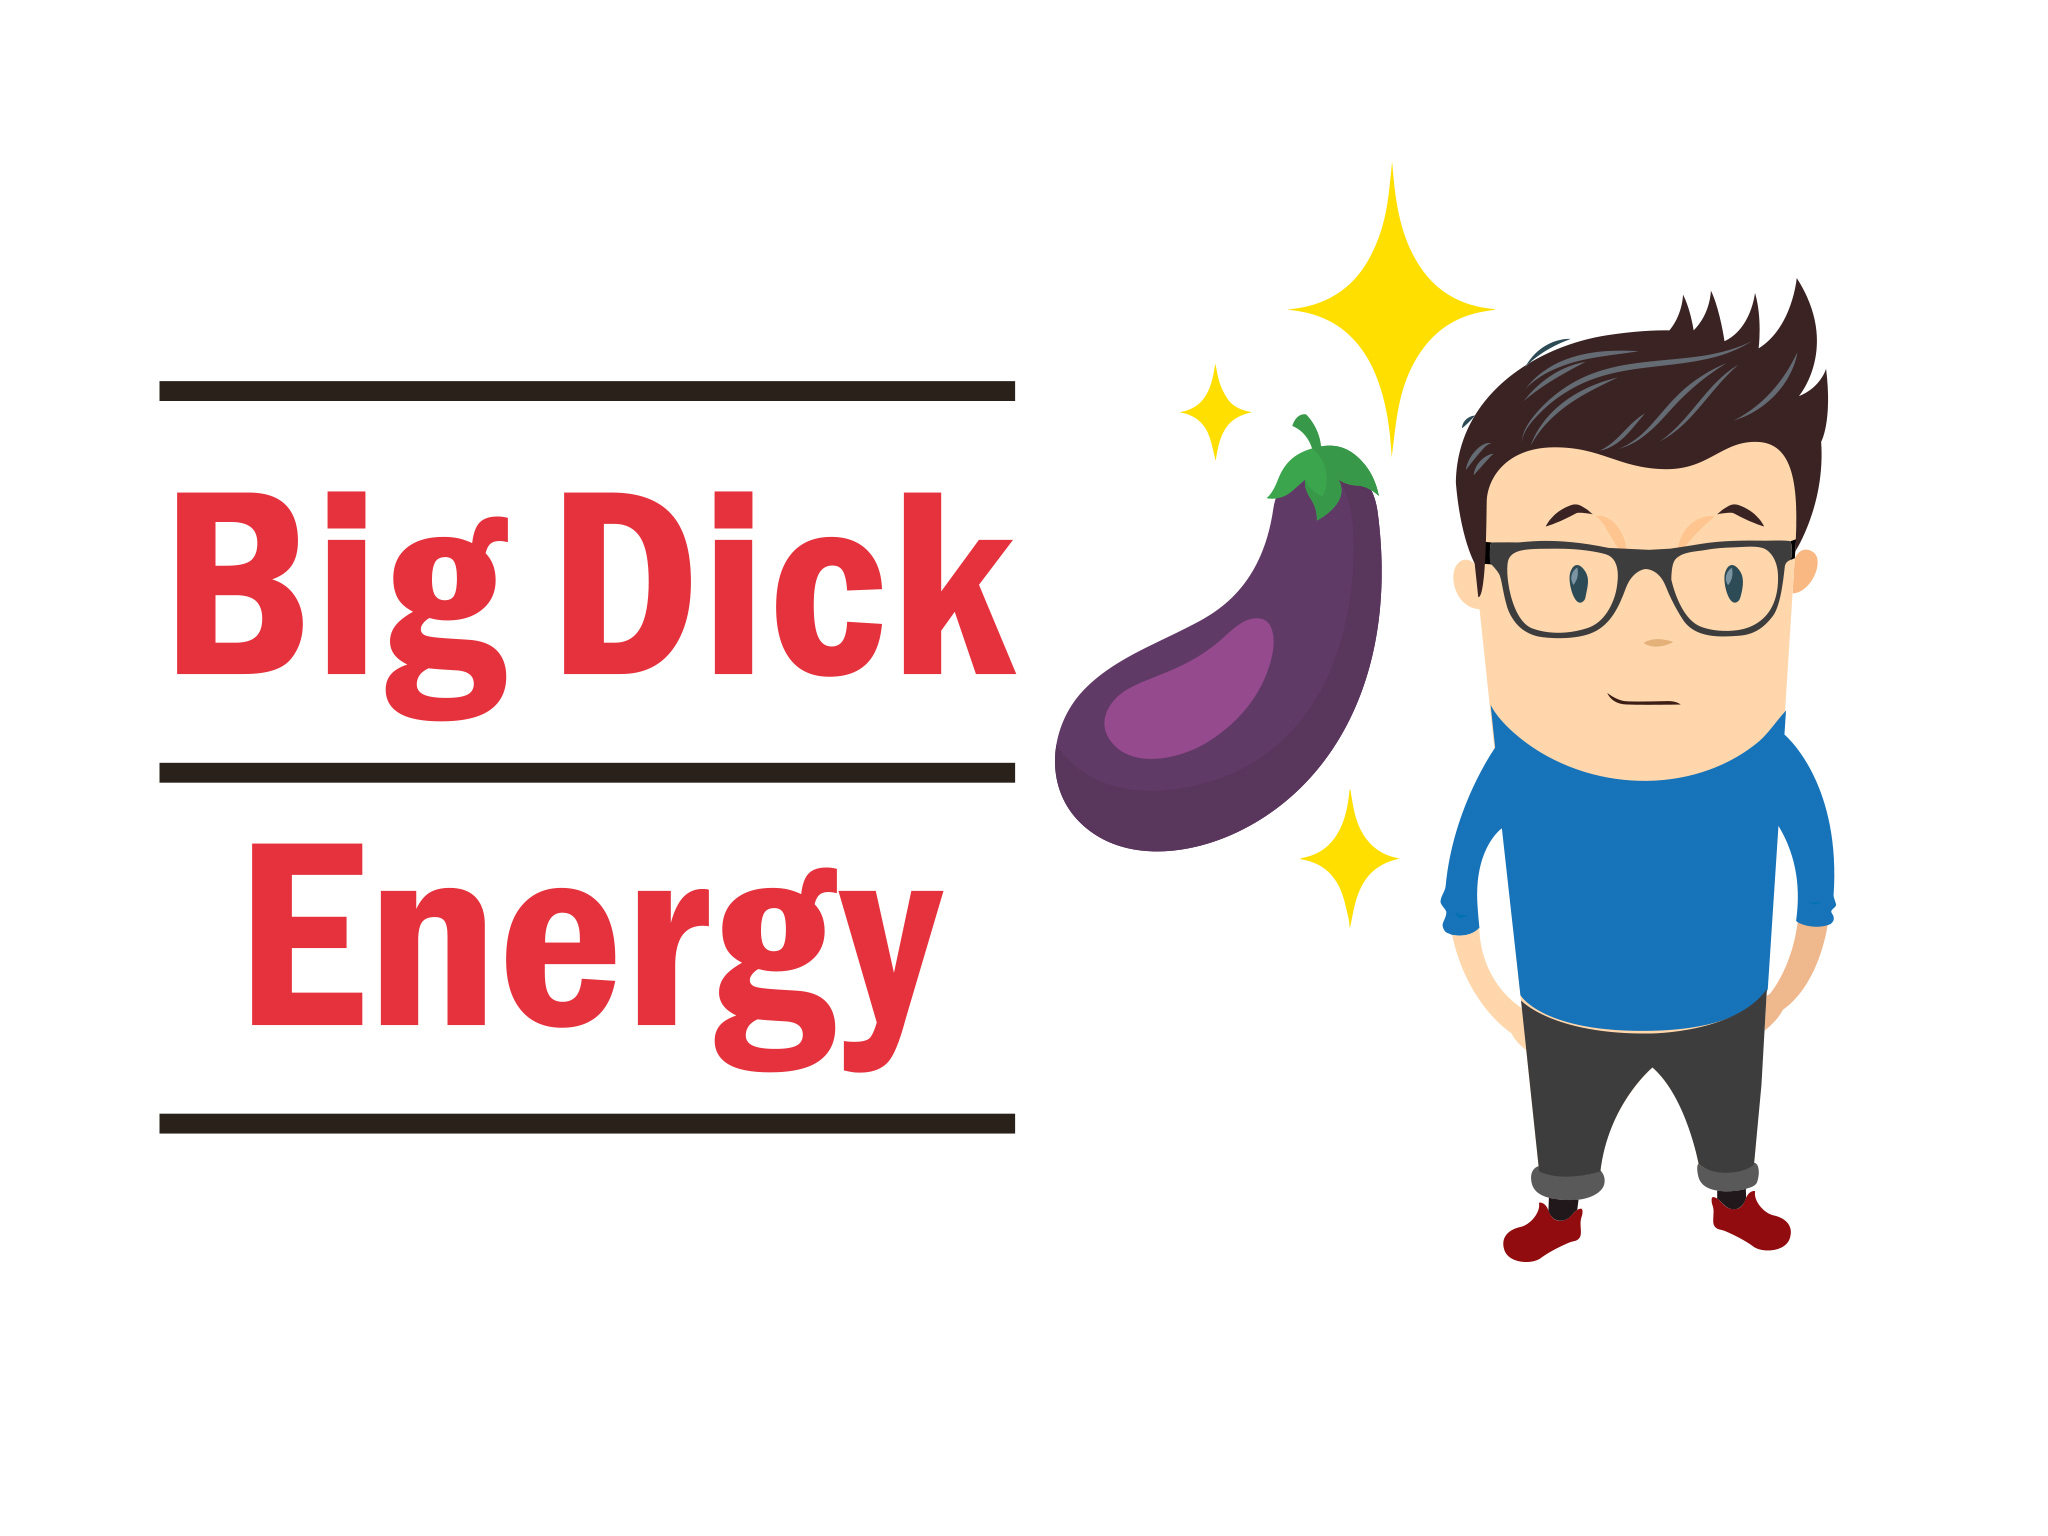 Big dick network energy meme